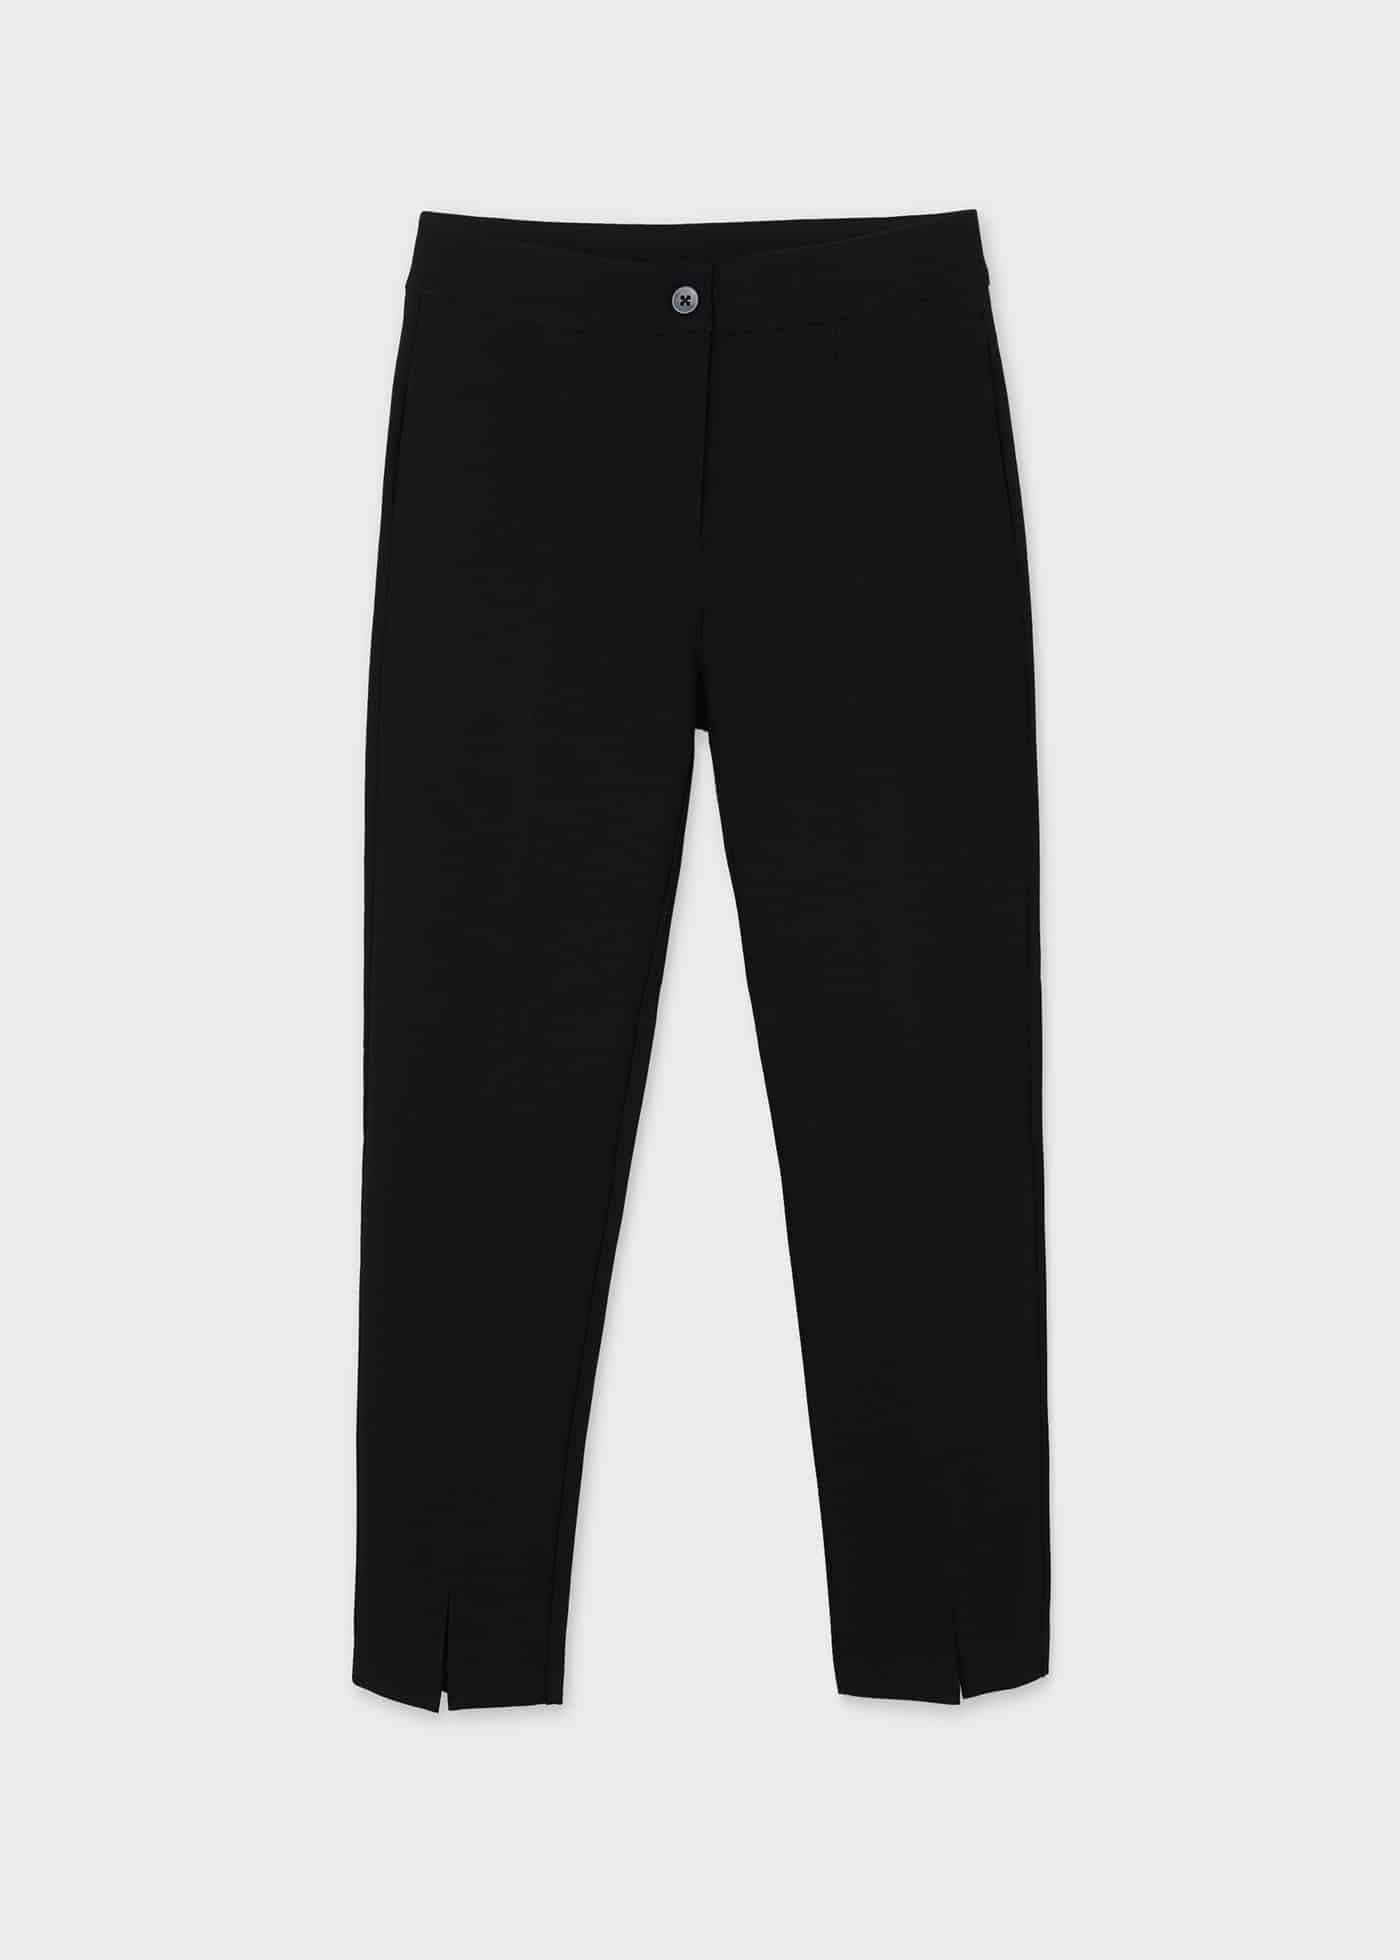 MAYORAL TWEEN G BLACK DRESS LONG PANTS $52.75 VAT – Sandbox Bahamas